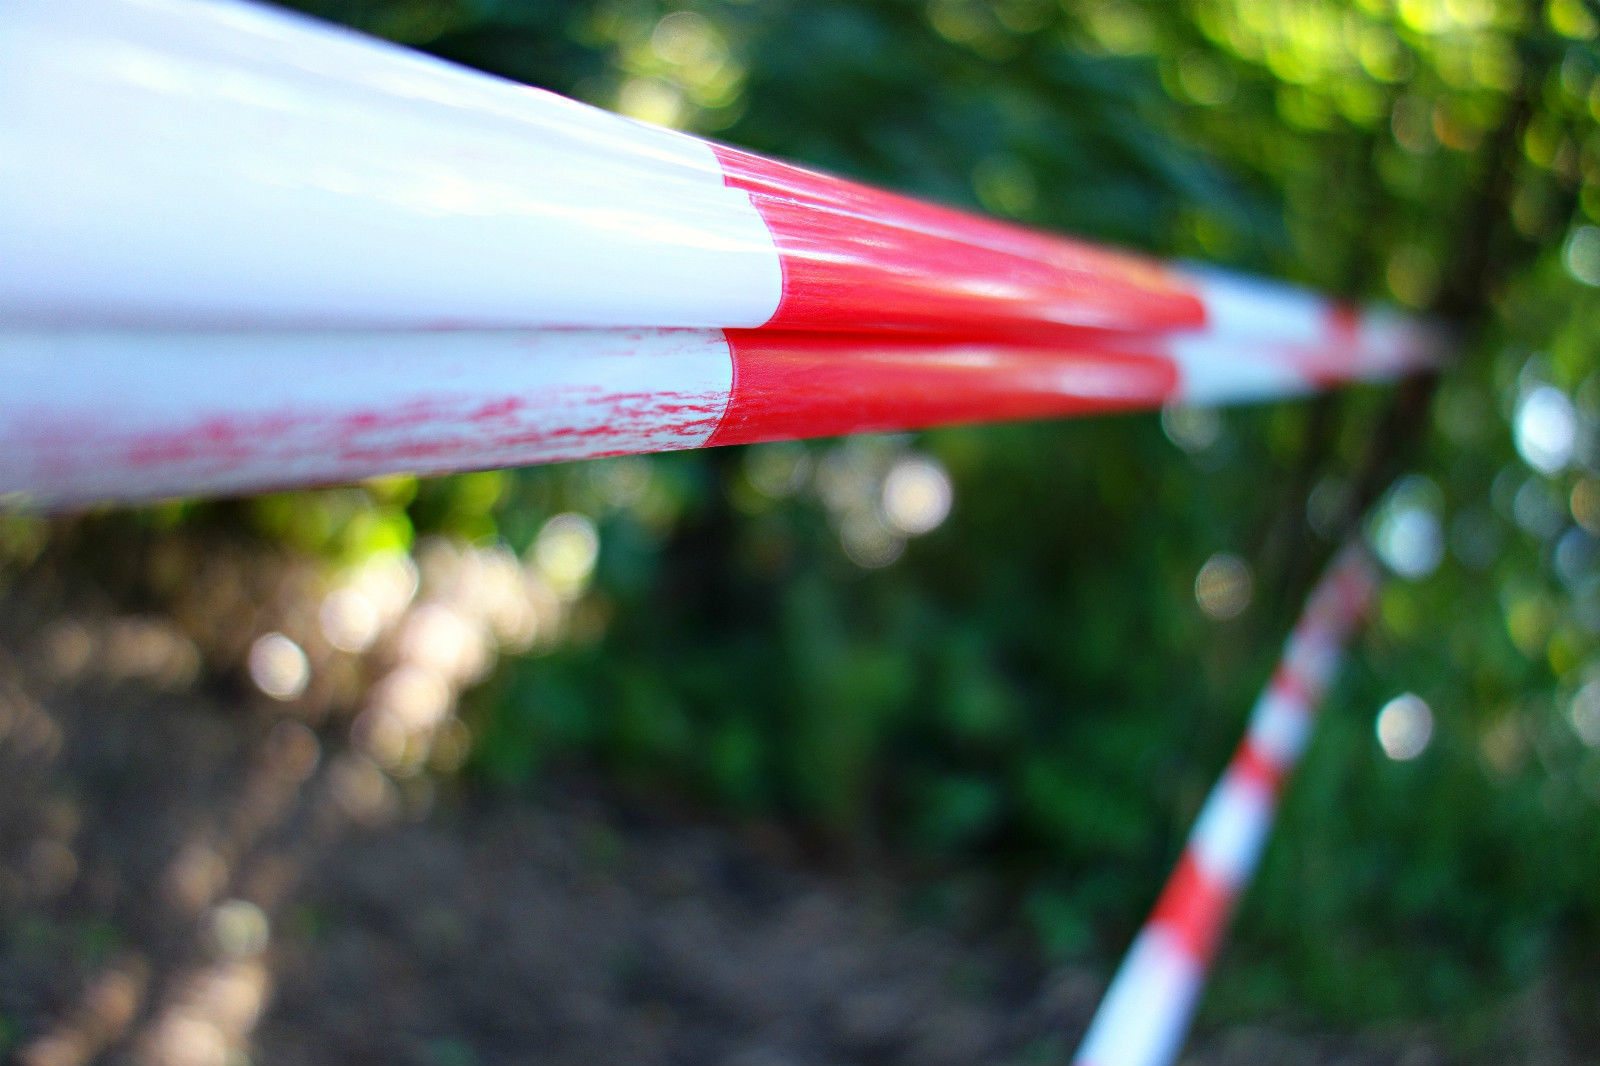 3x DANGER TAPE Red White Safety Warning Barricade Barrier Strip Non-Stick 20m